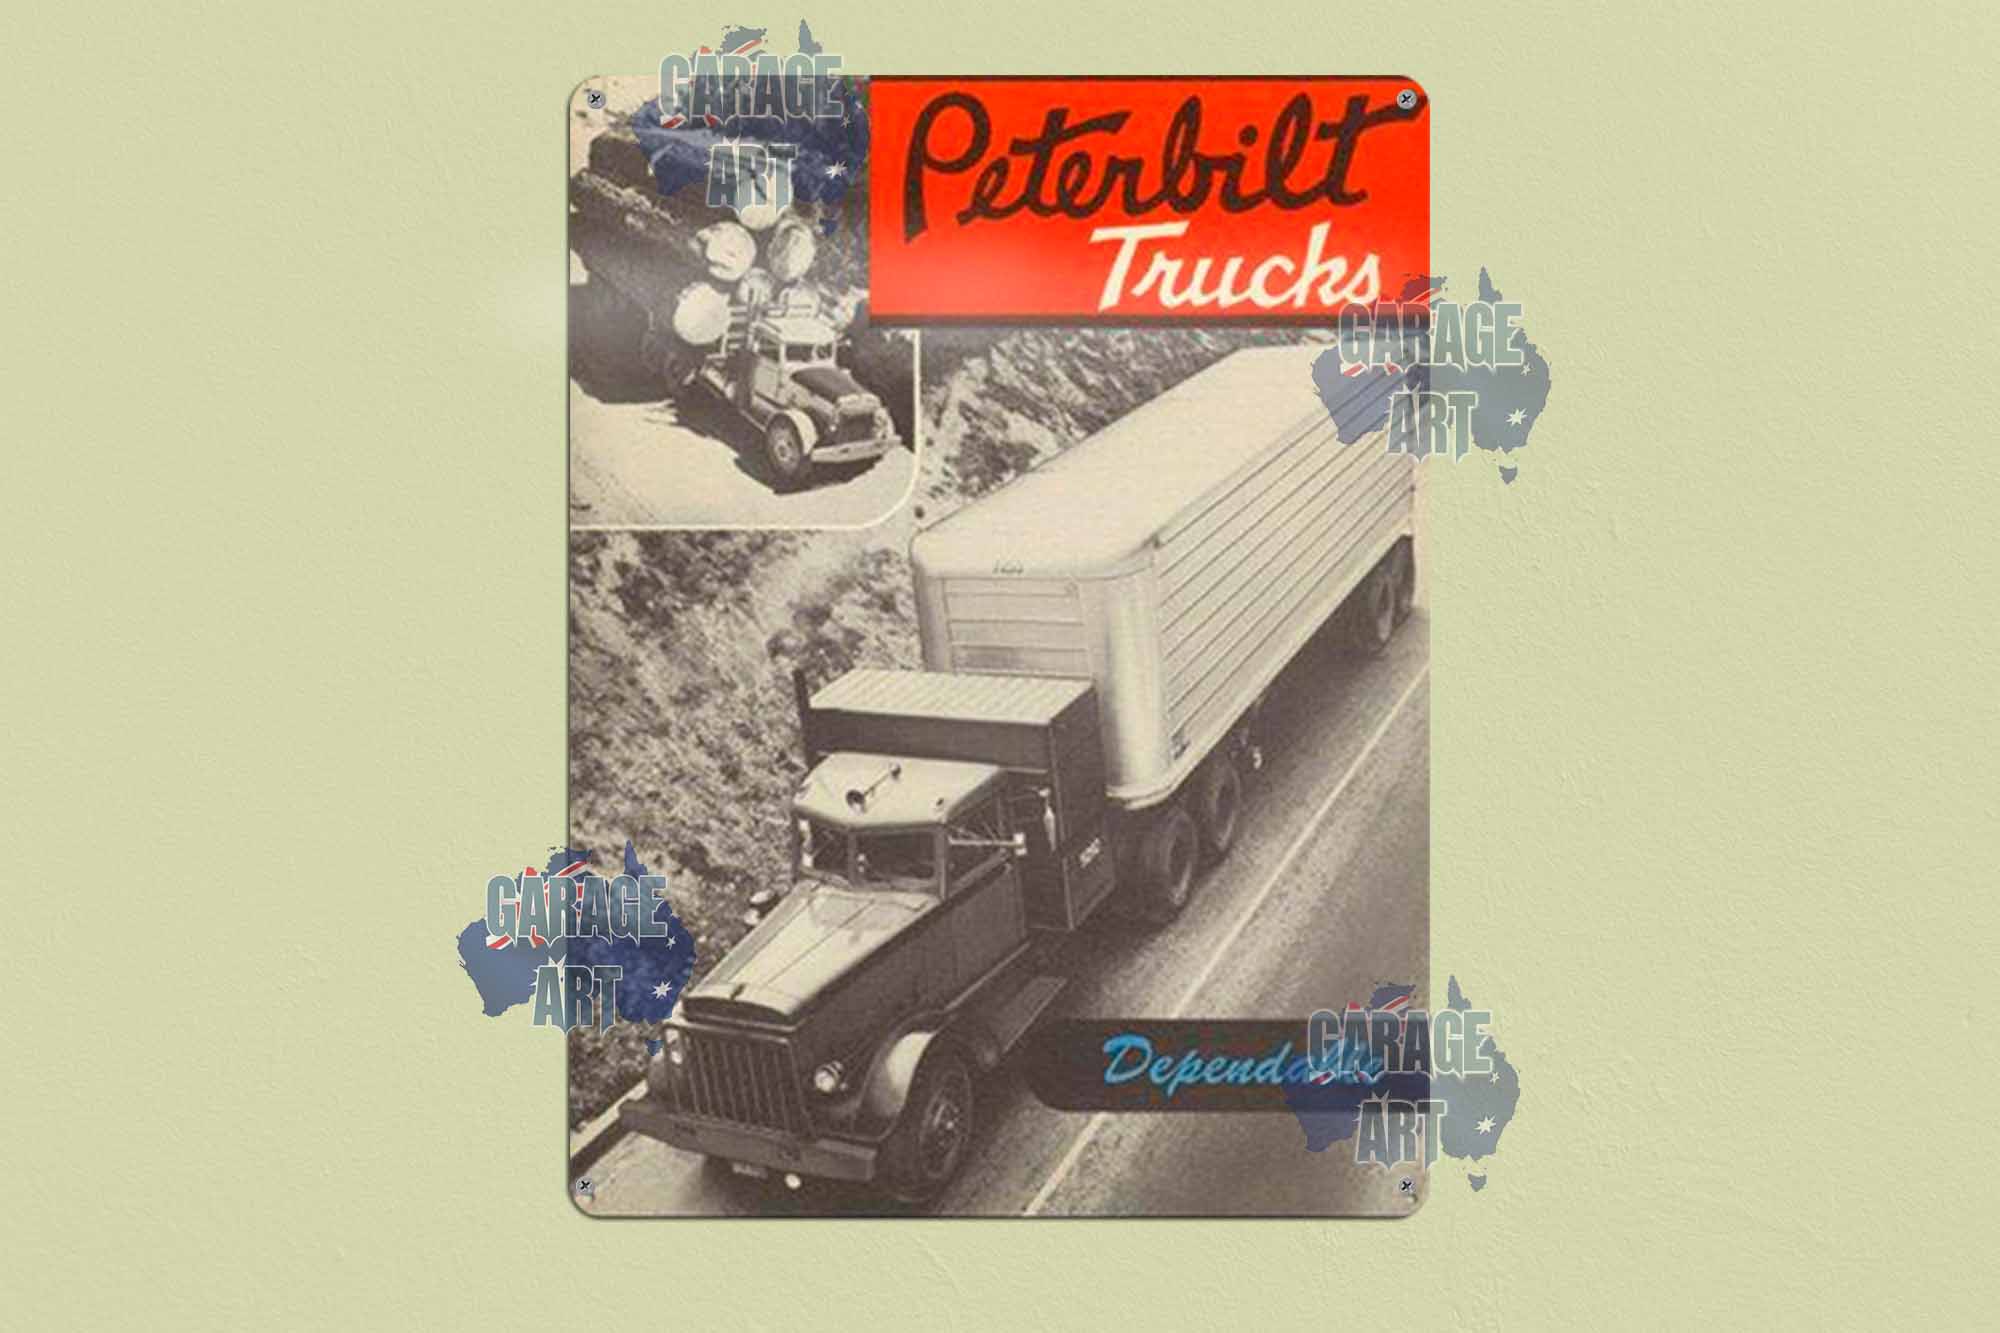 Peterbilt Trucks are Dependable Tin Sign freeshipping - garageartaustralia